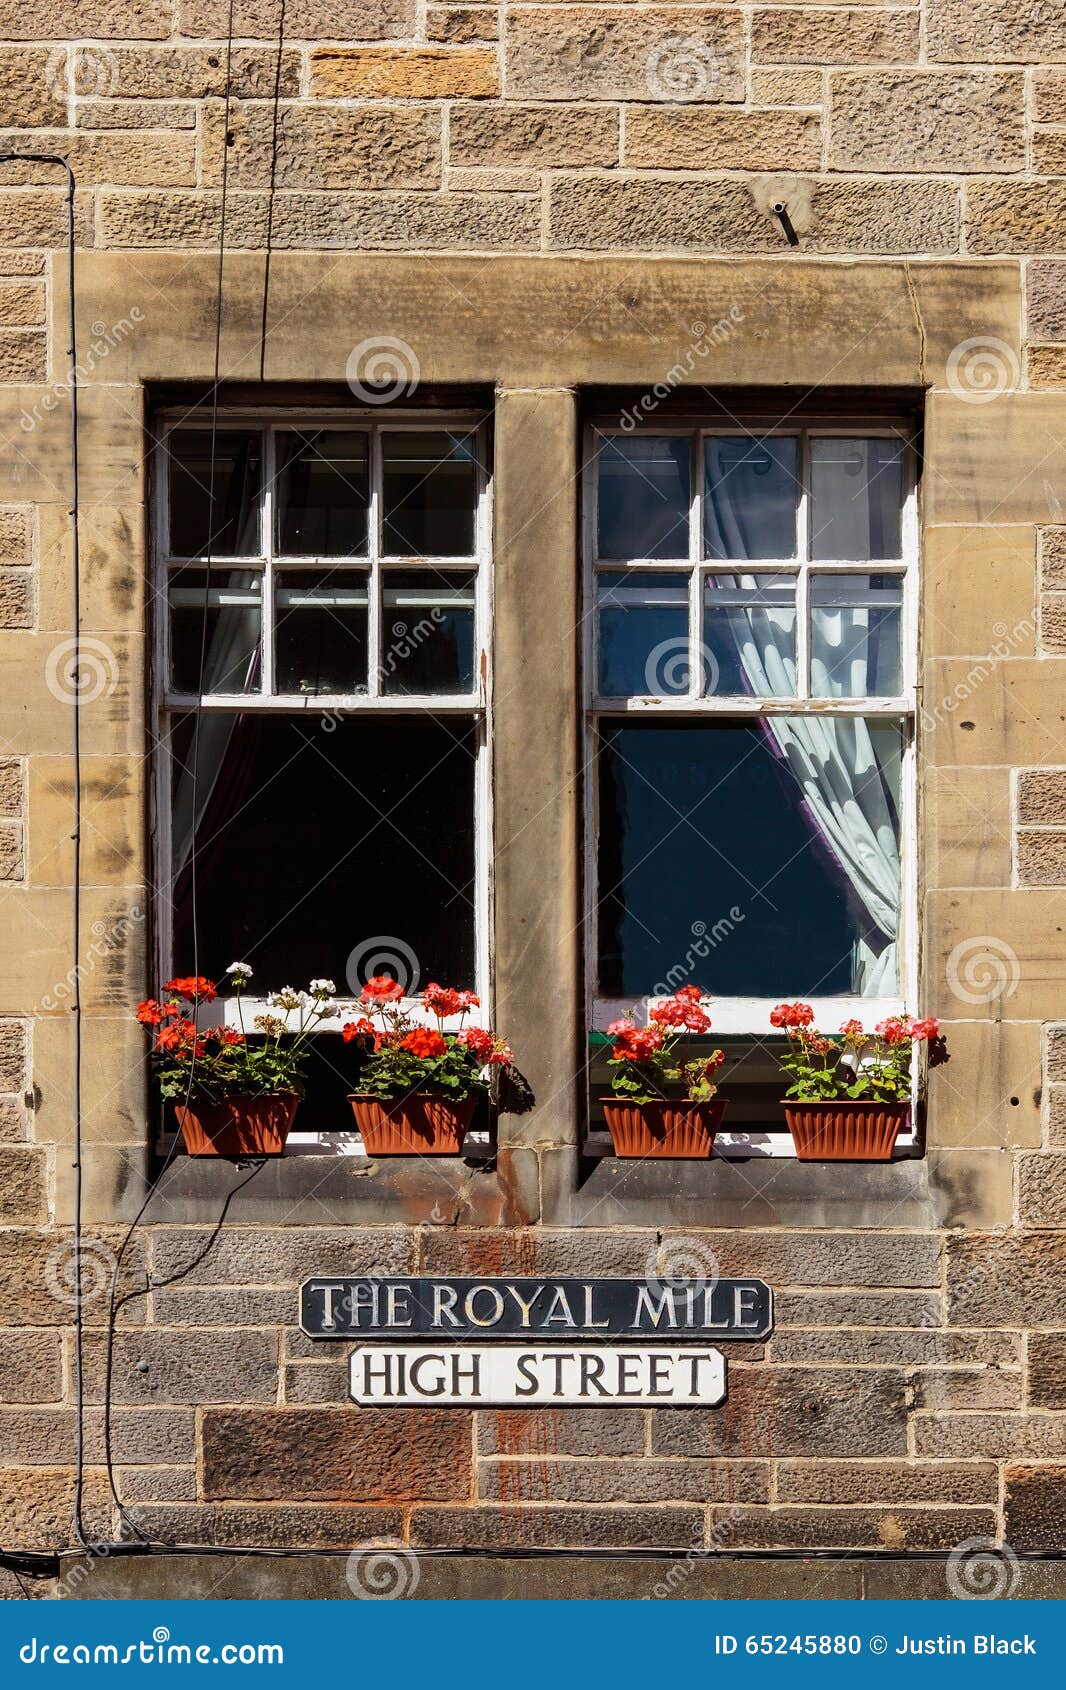 royal mile street in edinburgh